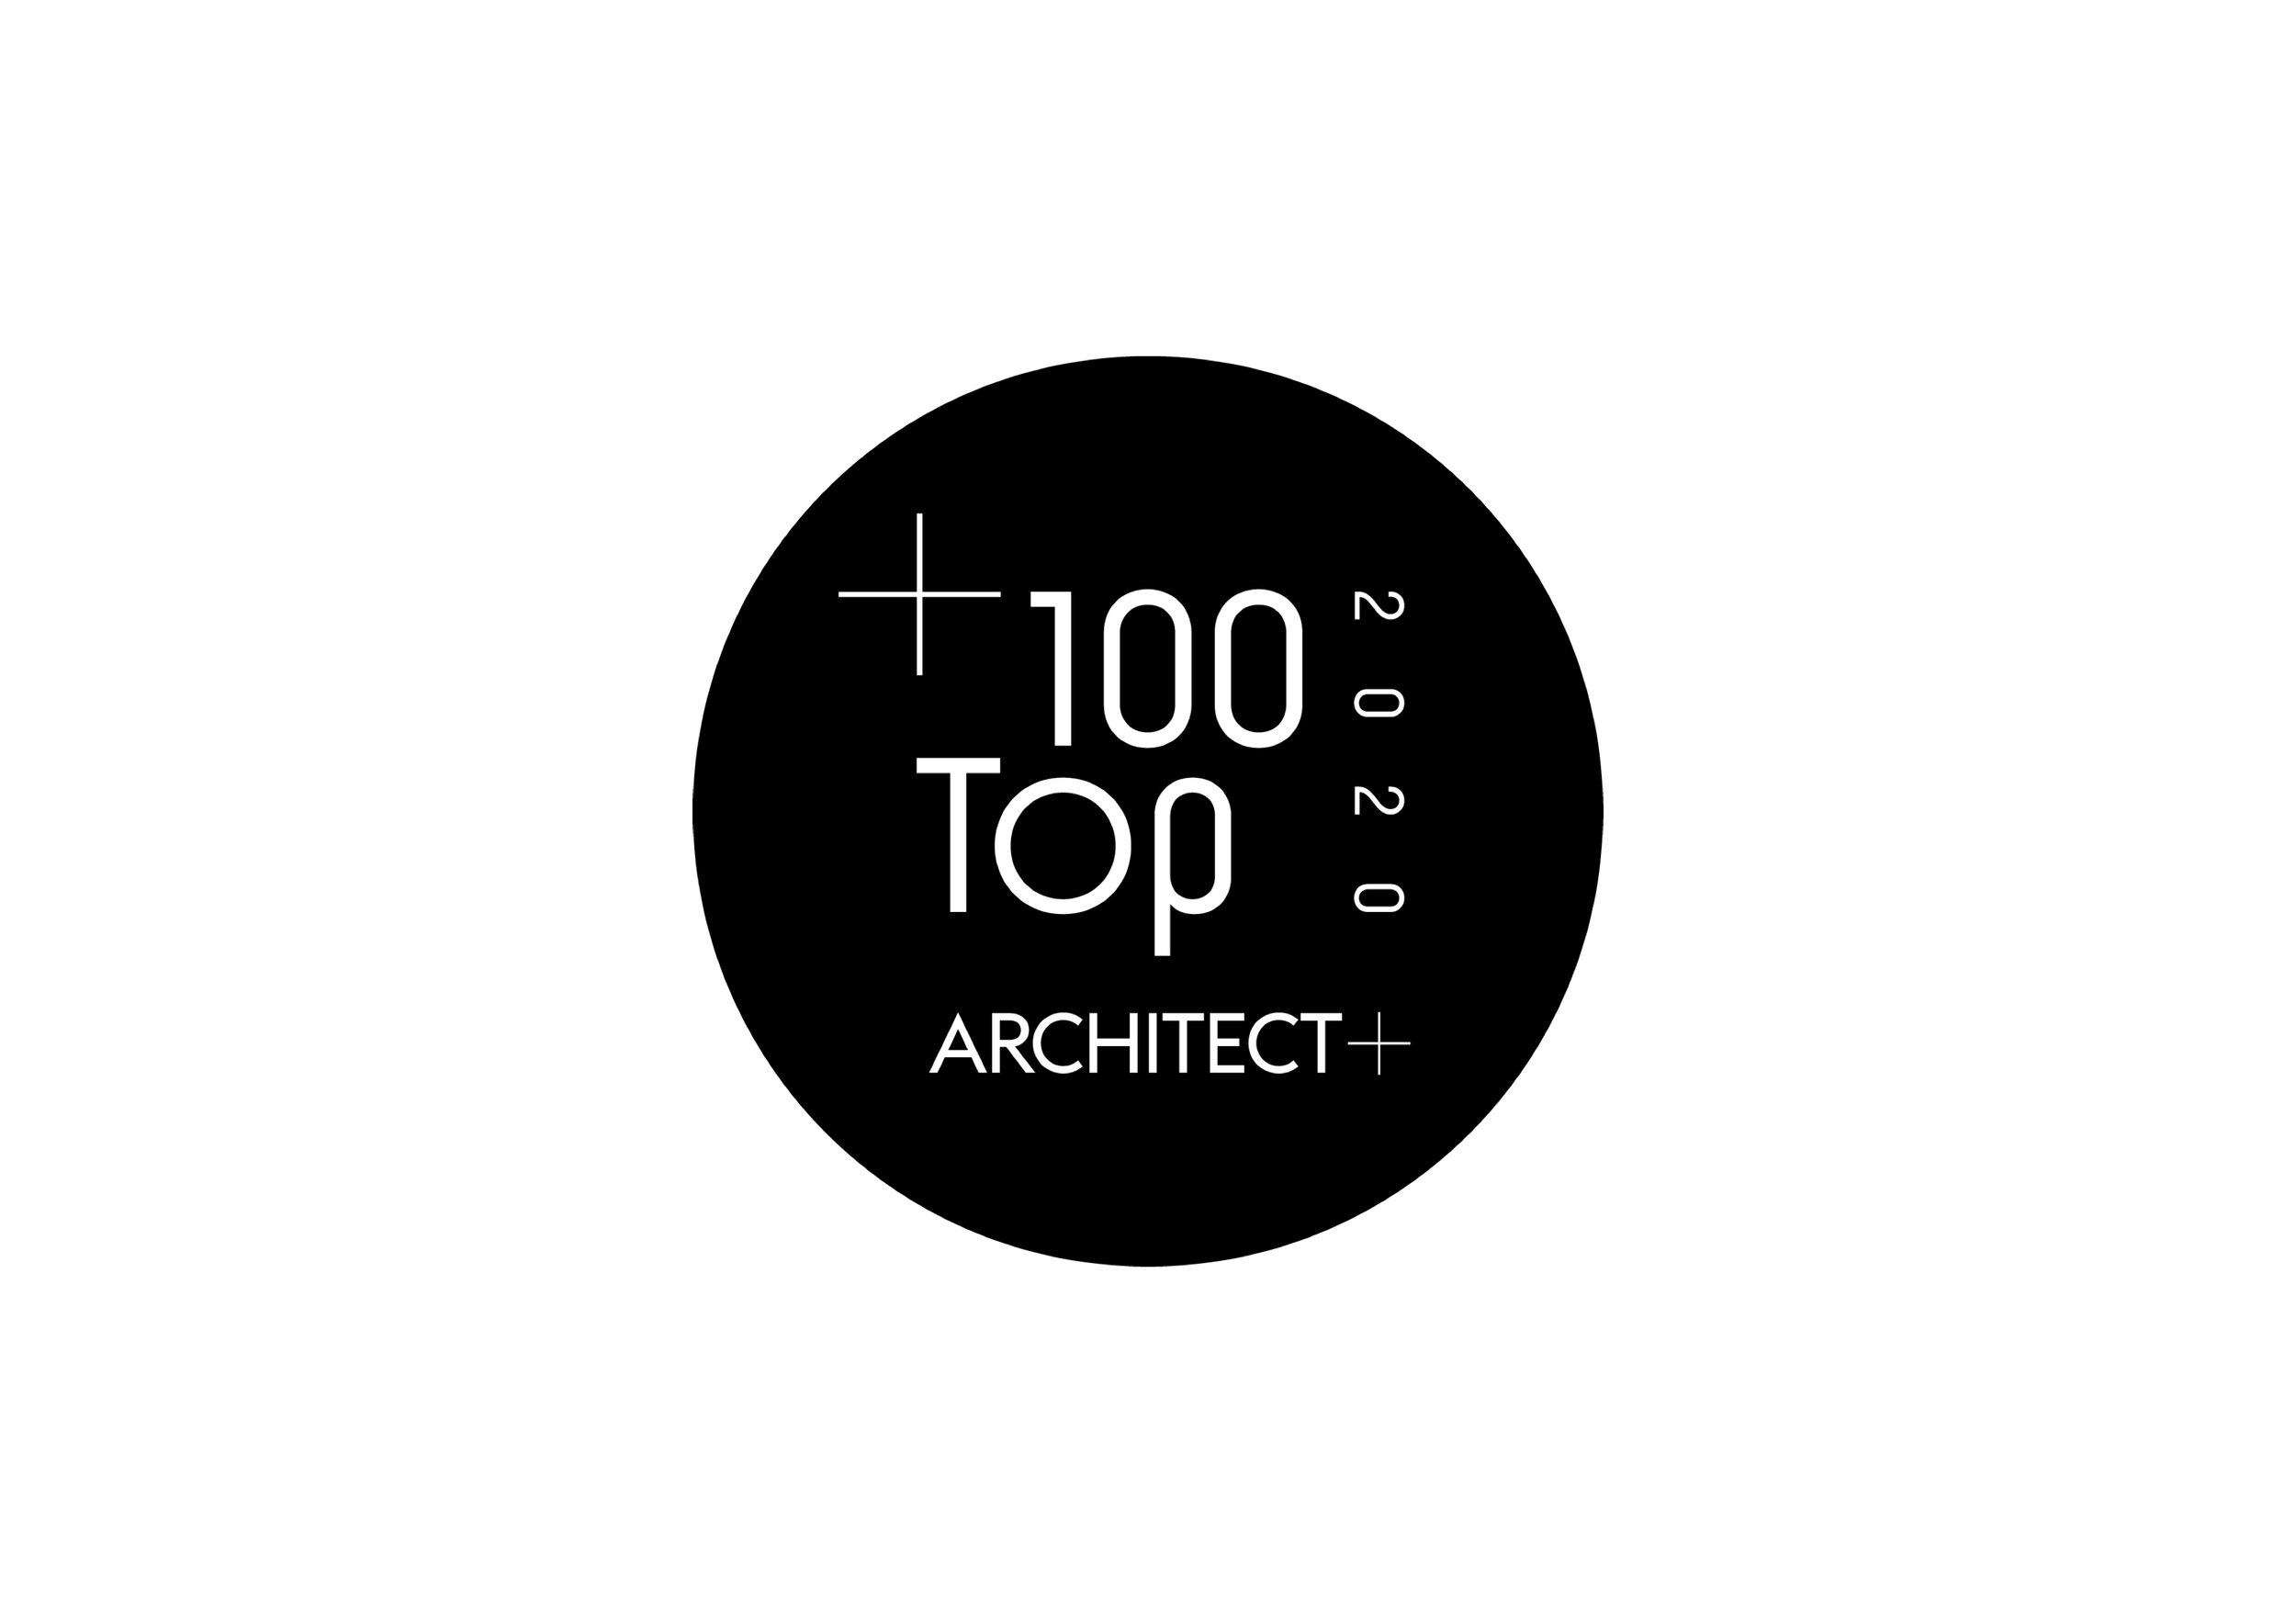 TOP 100 Architect+